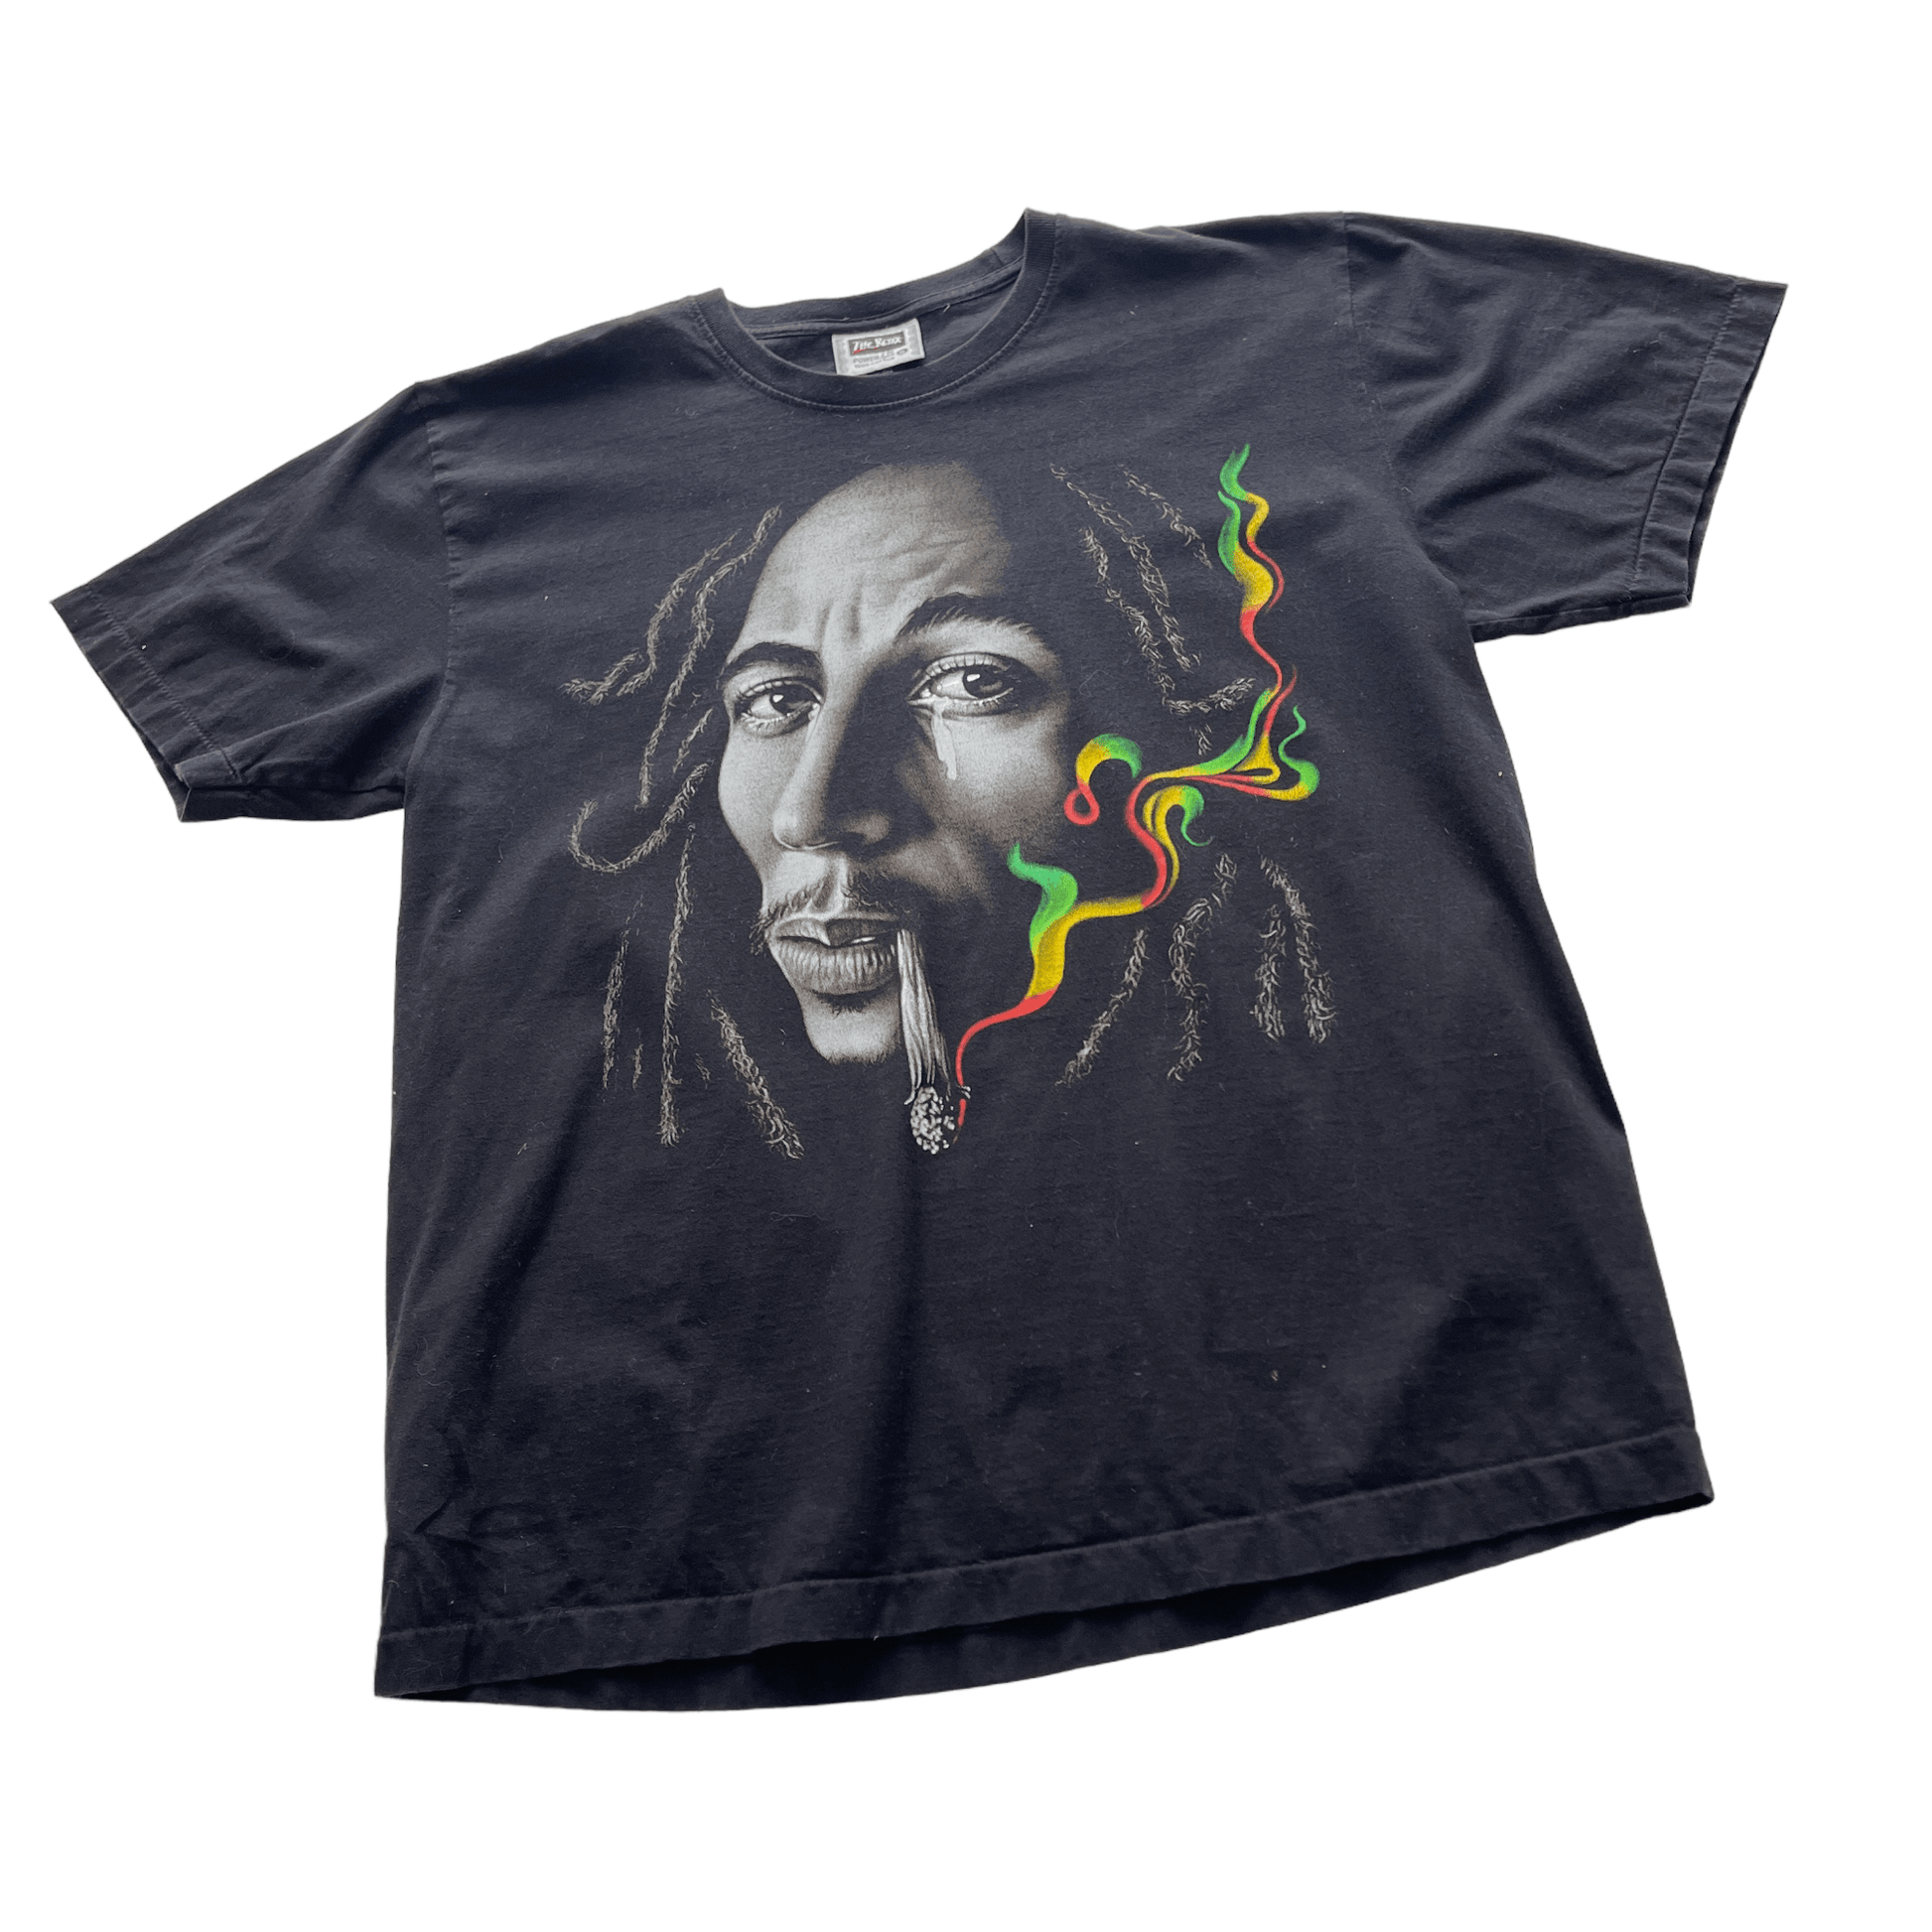 Vintage 90s Black Bob Marley Single Stitch Graphic Tee - Extra Large - The Streetwear Studio